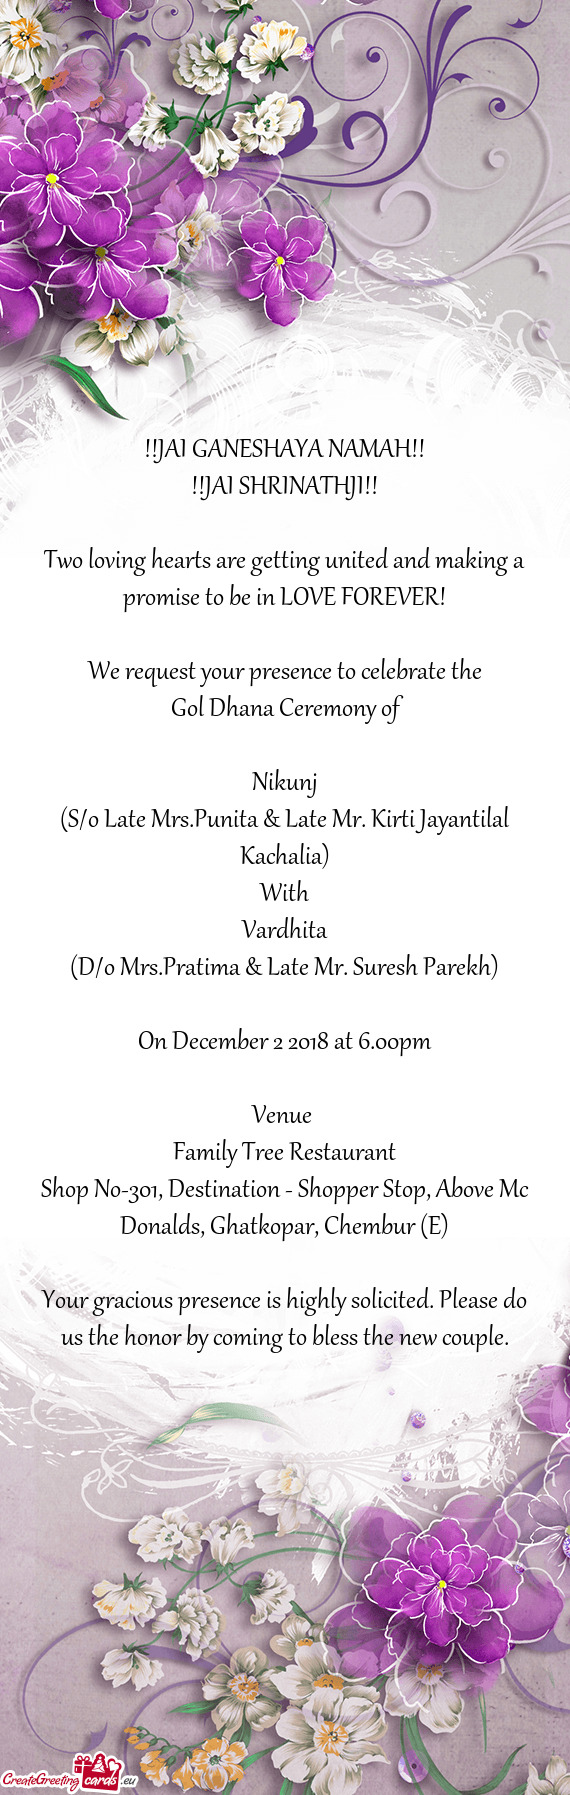 (S/o Late Mrs.Punita & Late Mr. Kirti Jayantilal Kachalia)